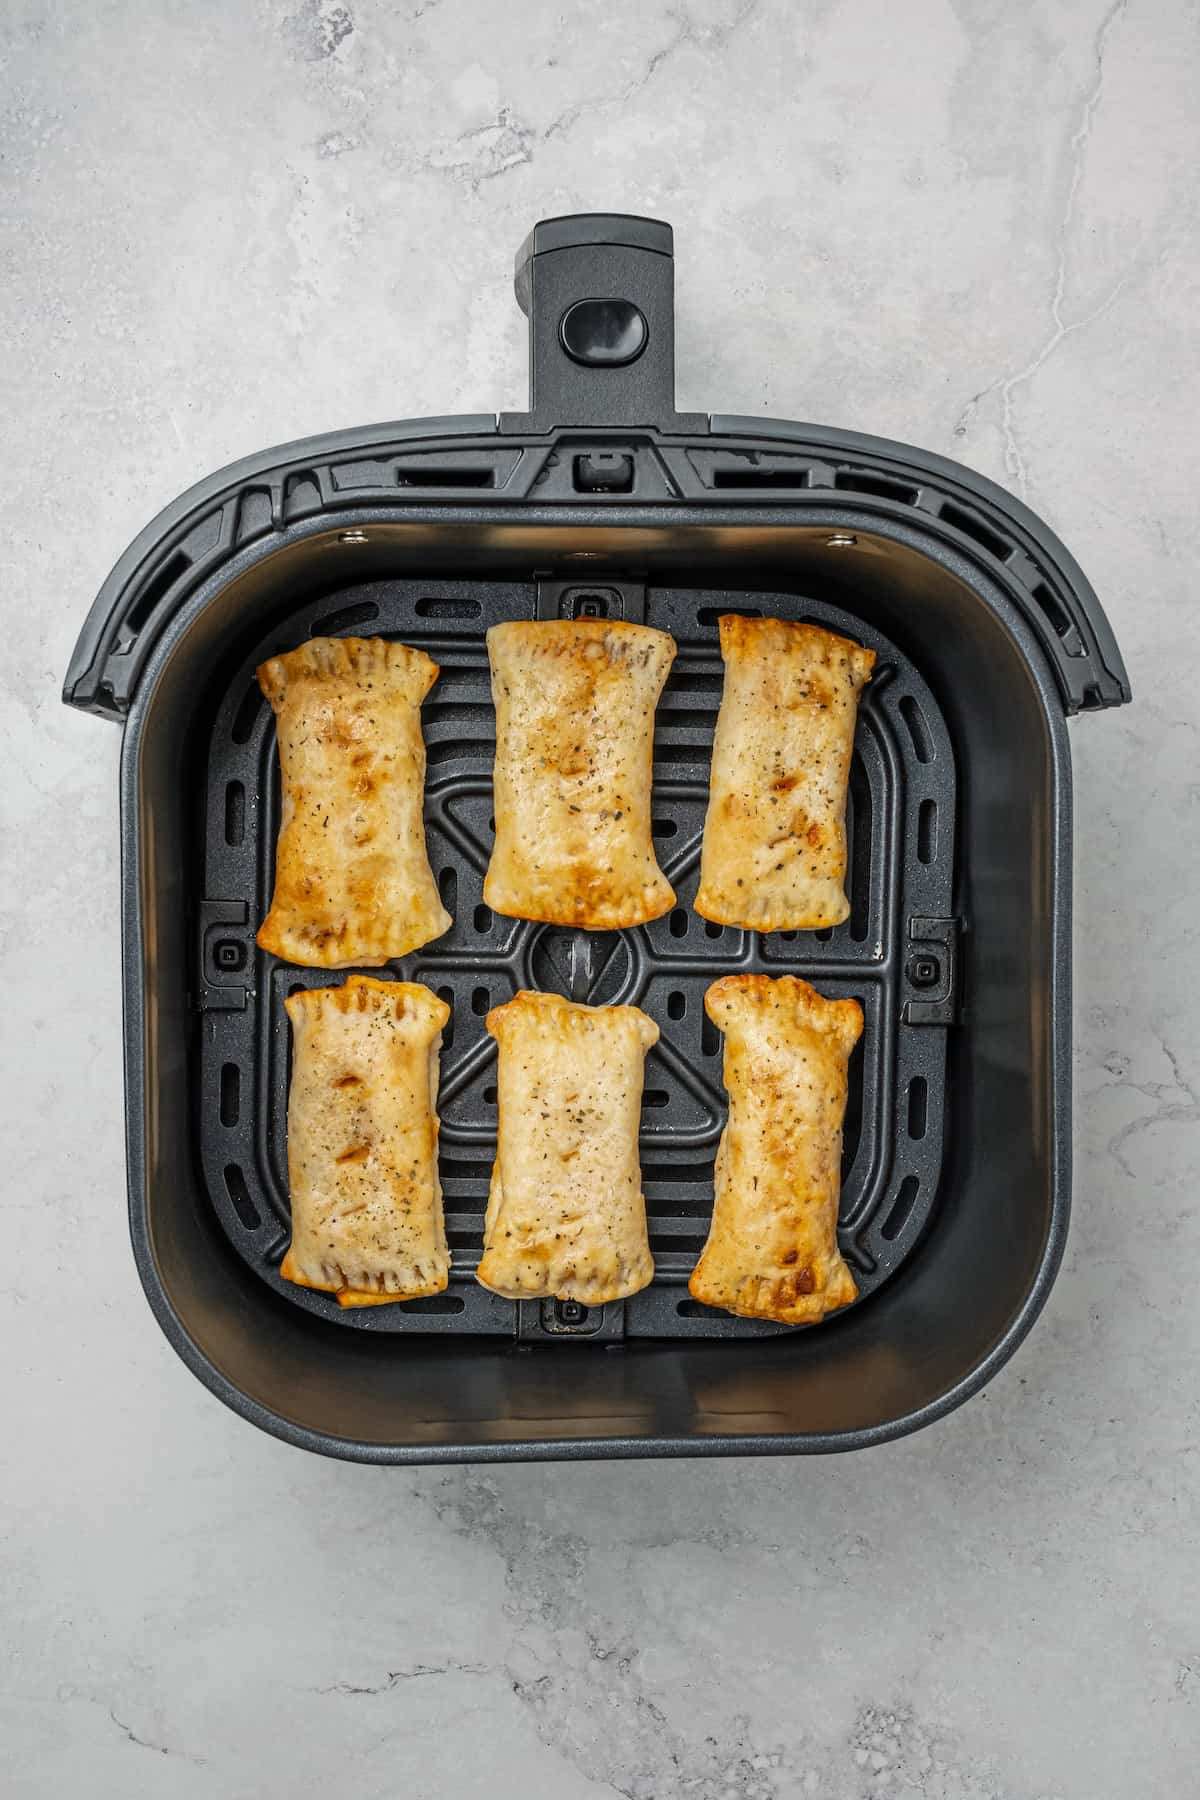 Overhead view of crispy gluten free pizza rolls inside the air fryer.